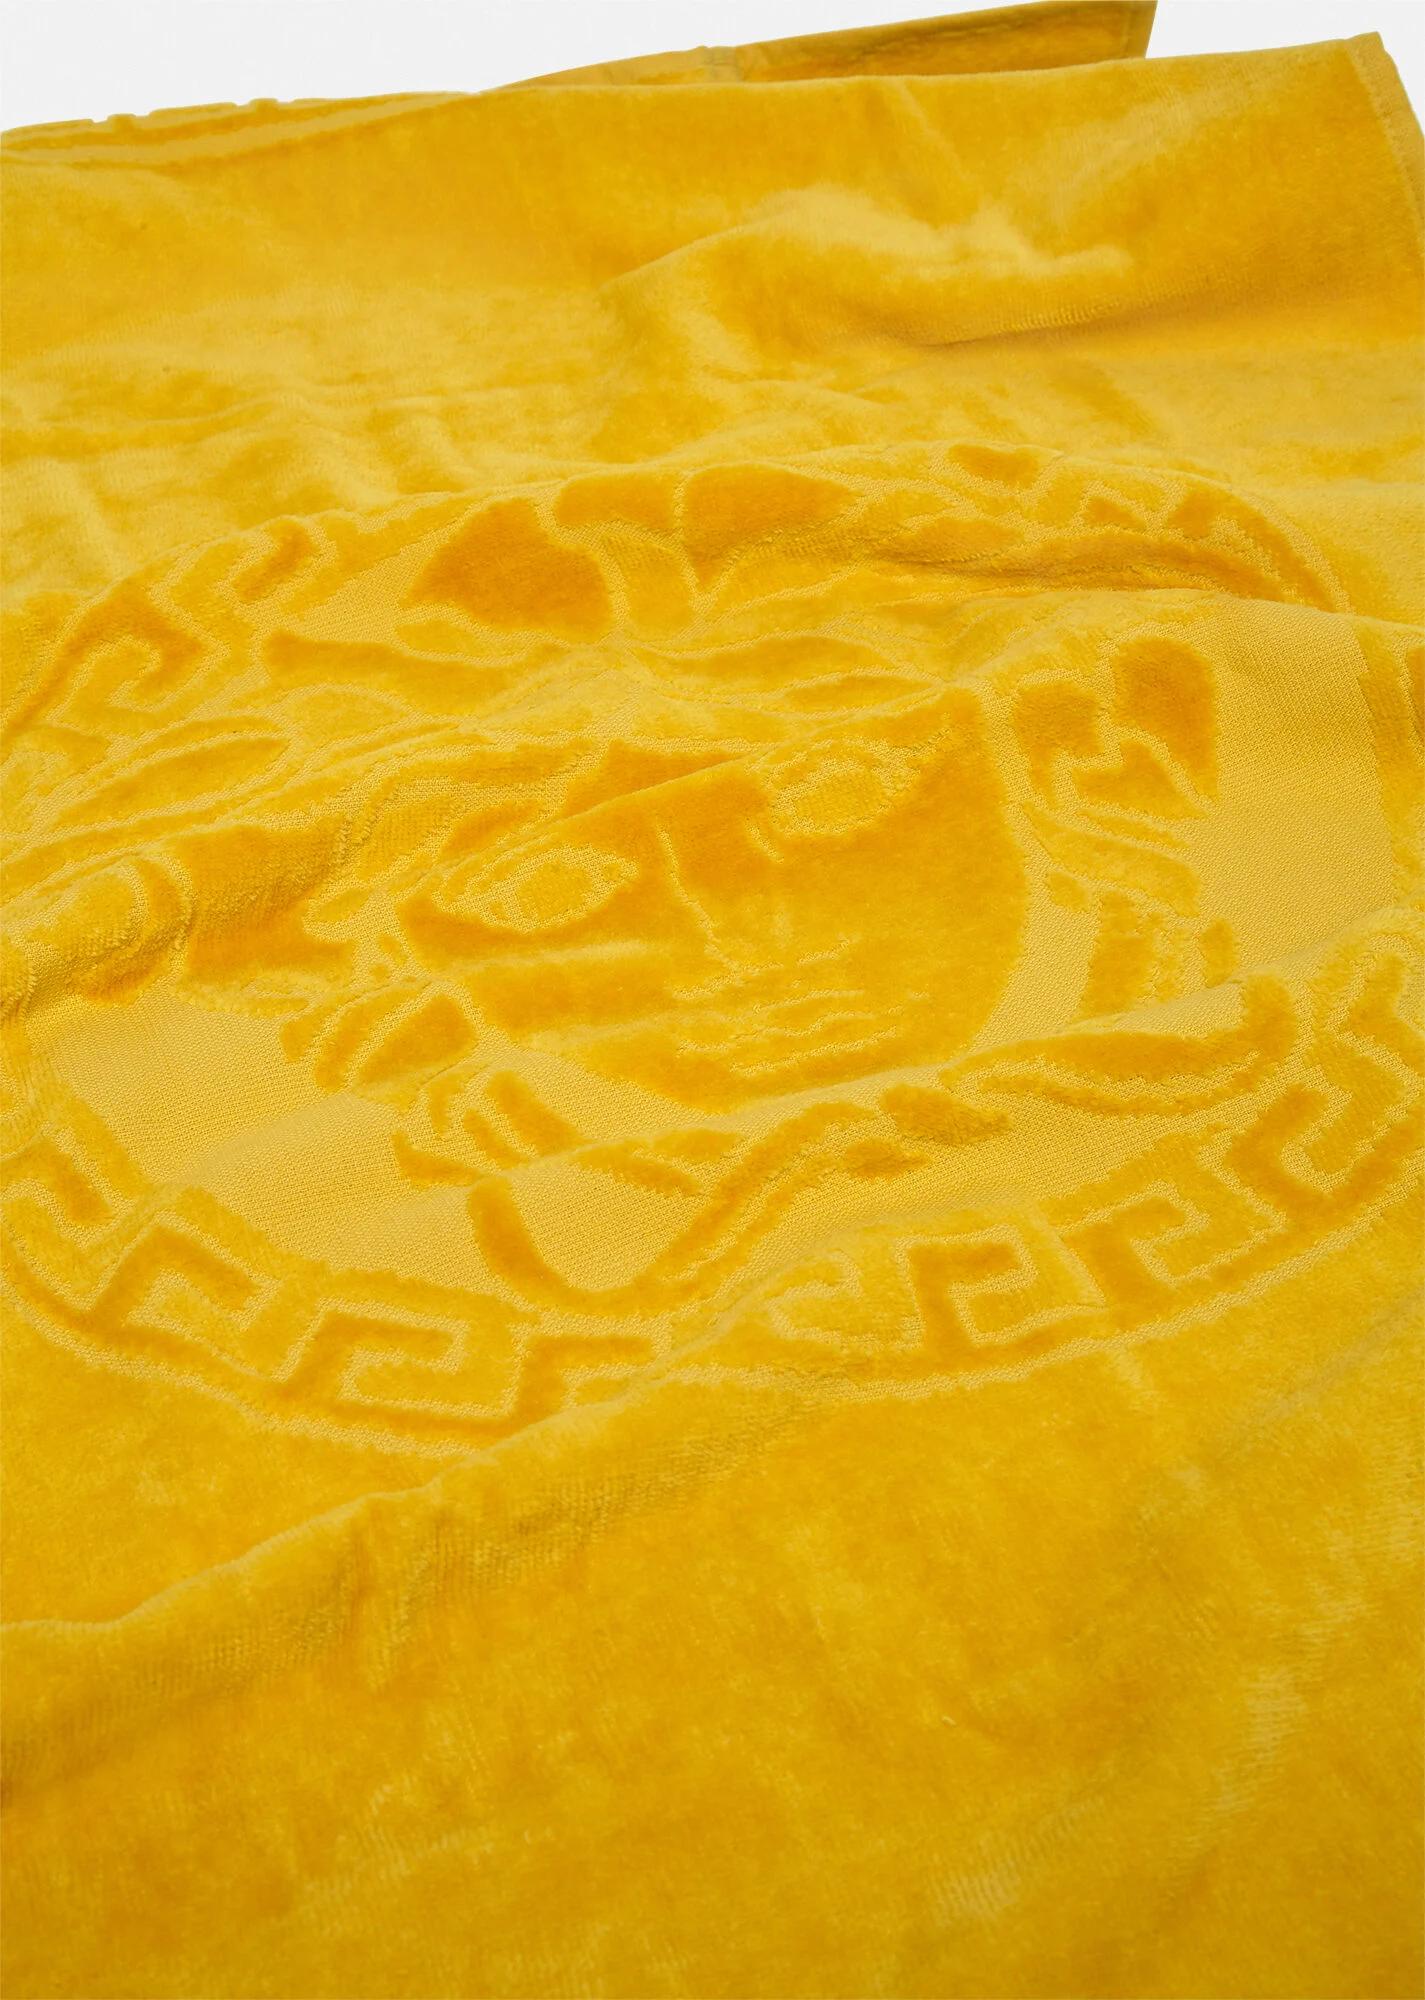 Baroque Revival Versace Medusa Gold Hand Towel, Deep Yellow, Italy